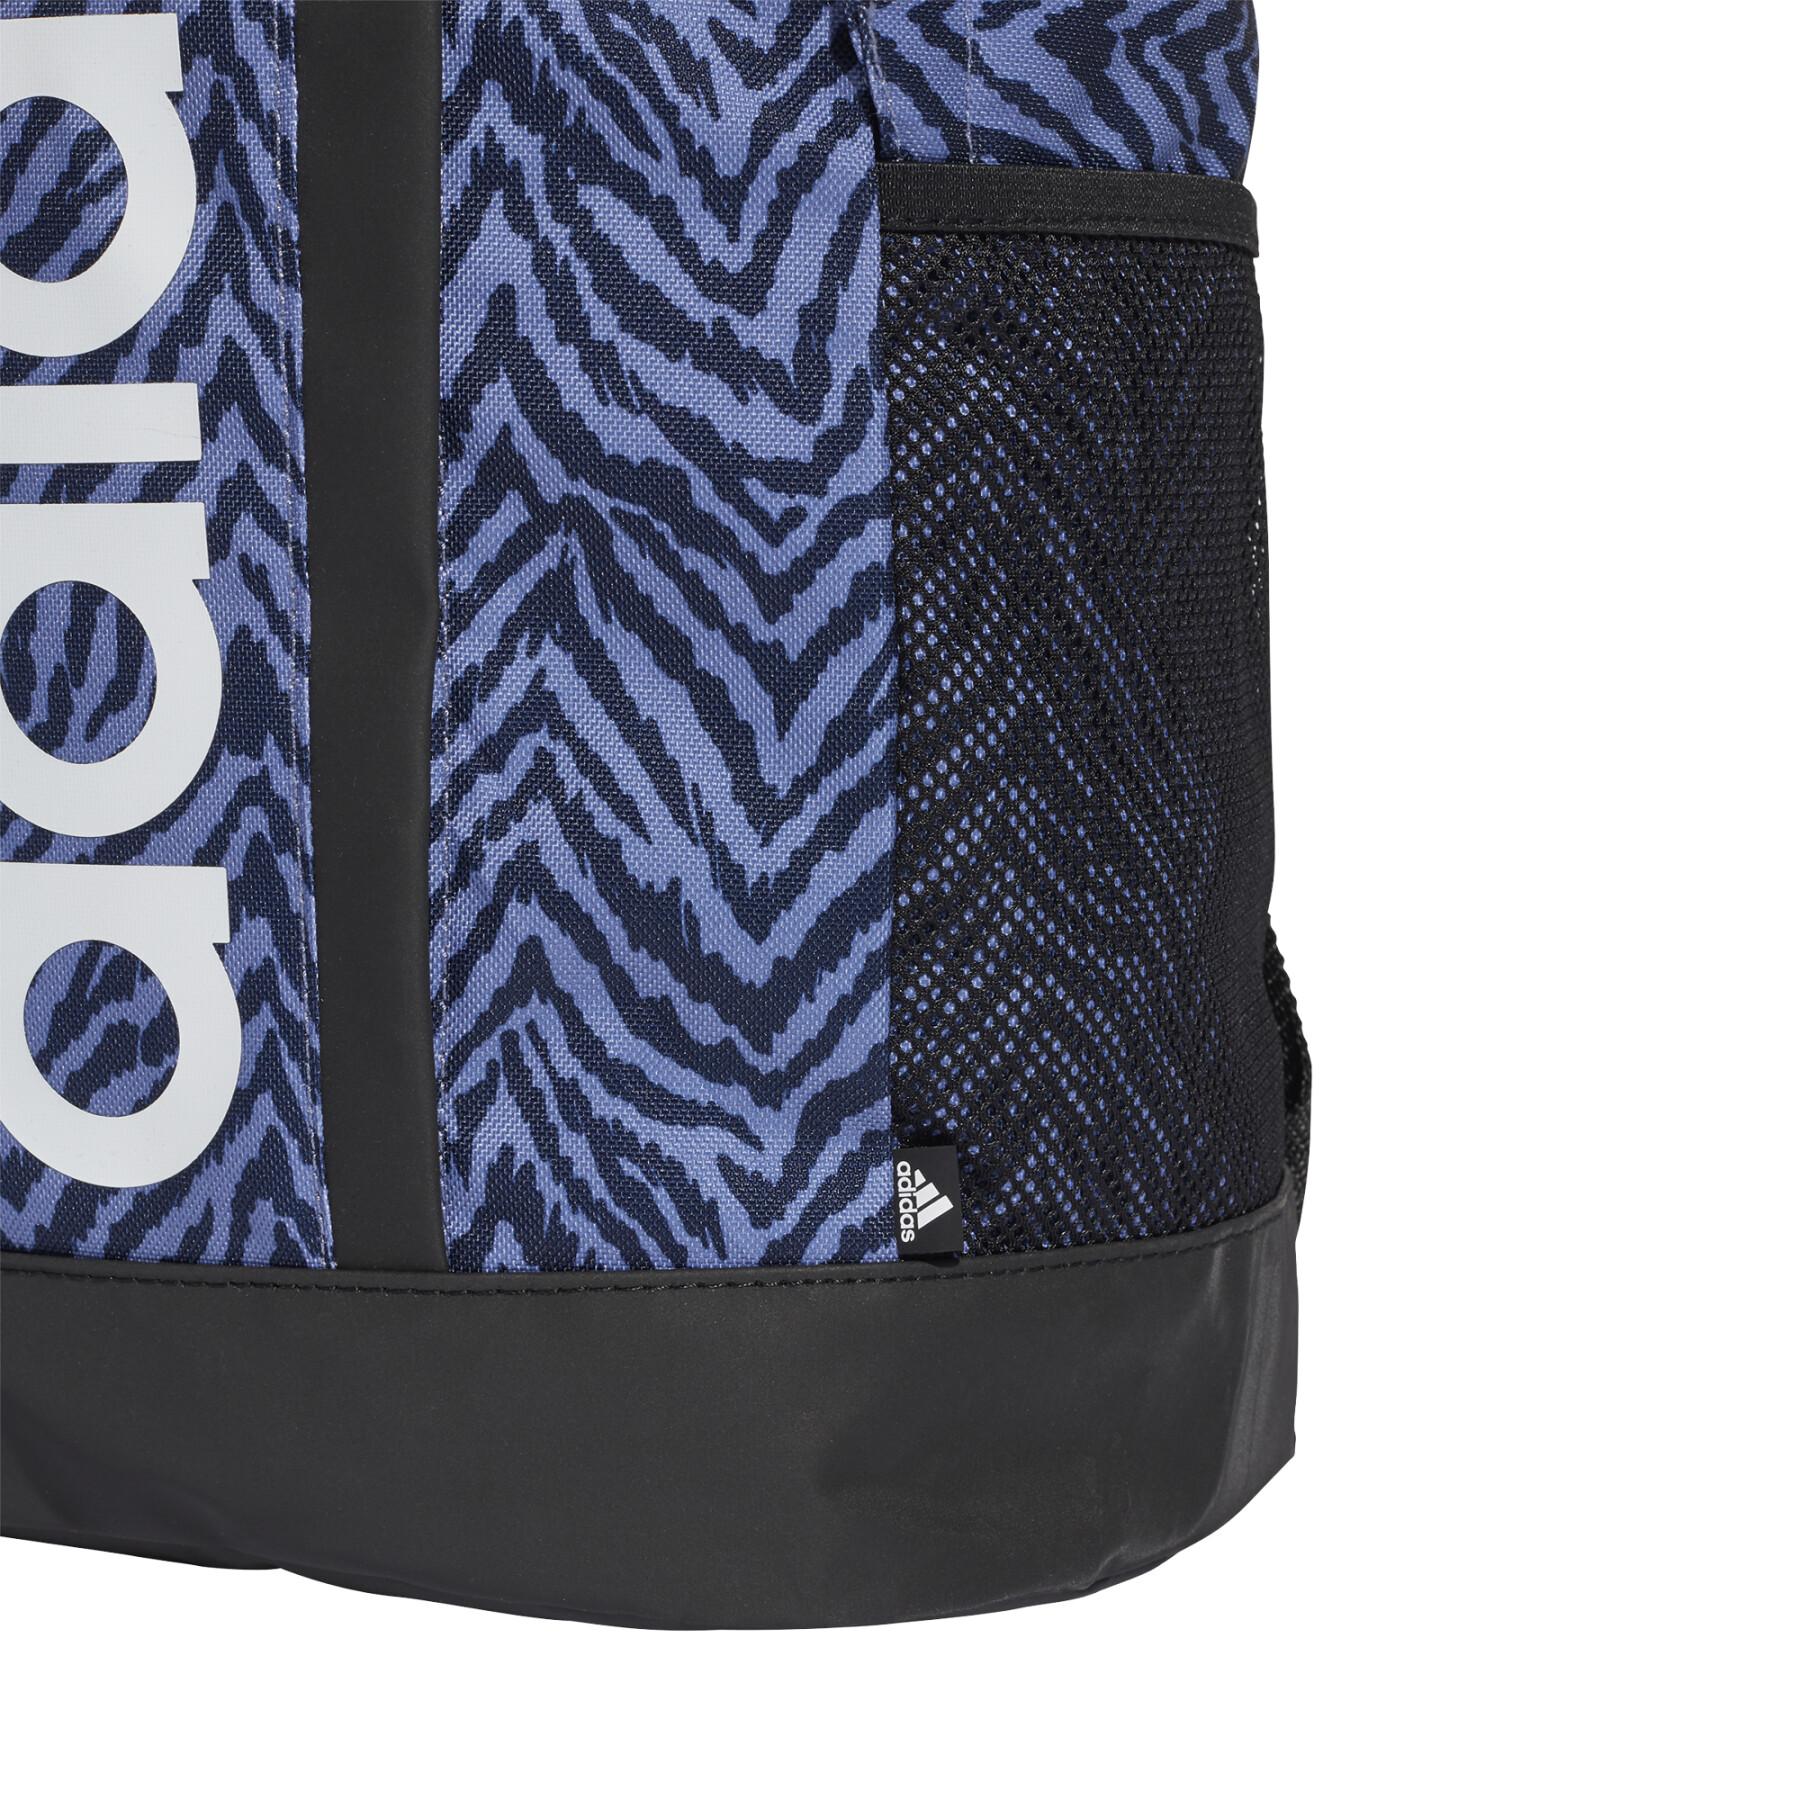 Women's backpack adidas Zebra